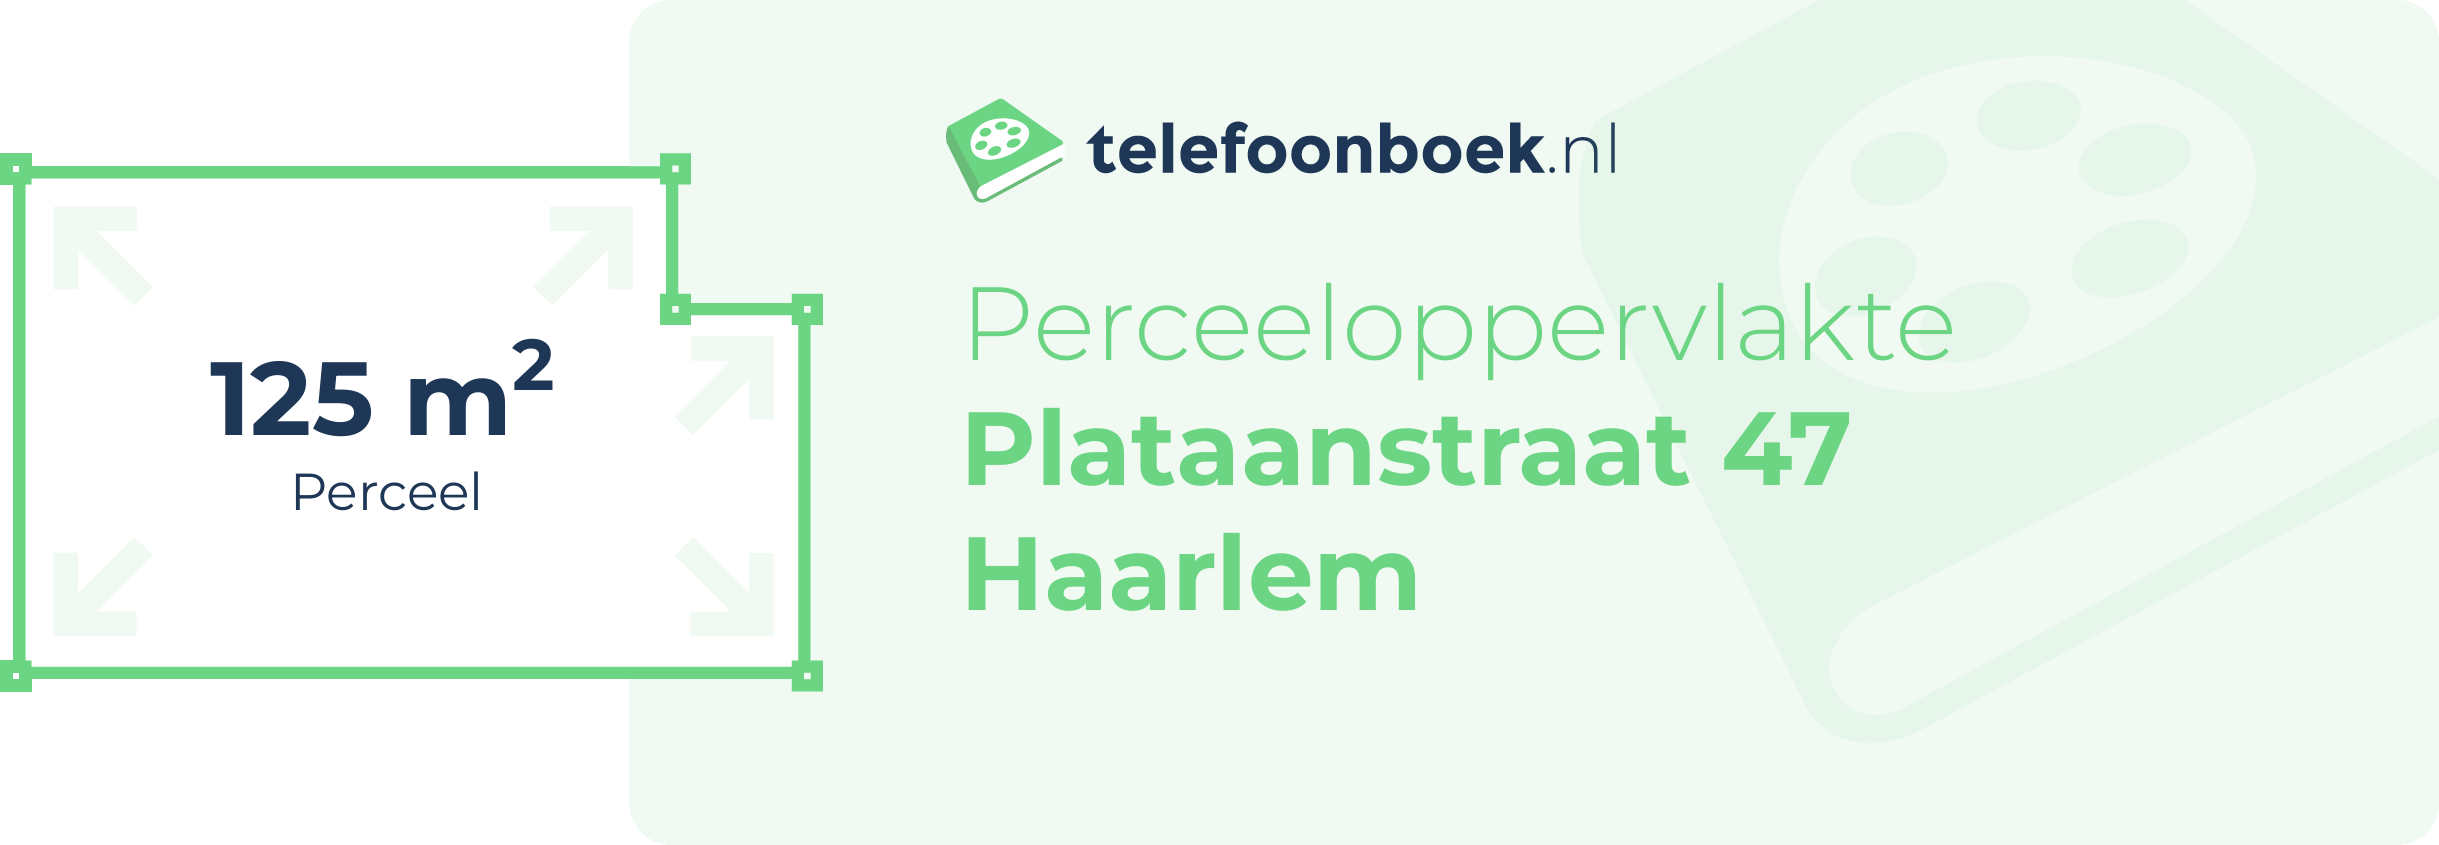 Perceeloppervlakte Plataanstraat 47 Haarlem